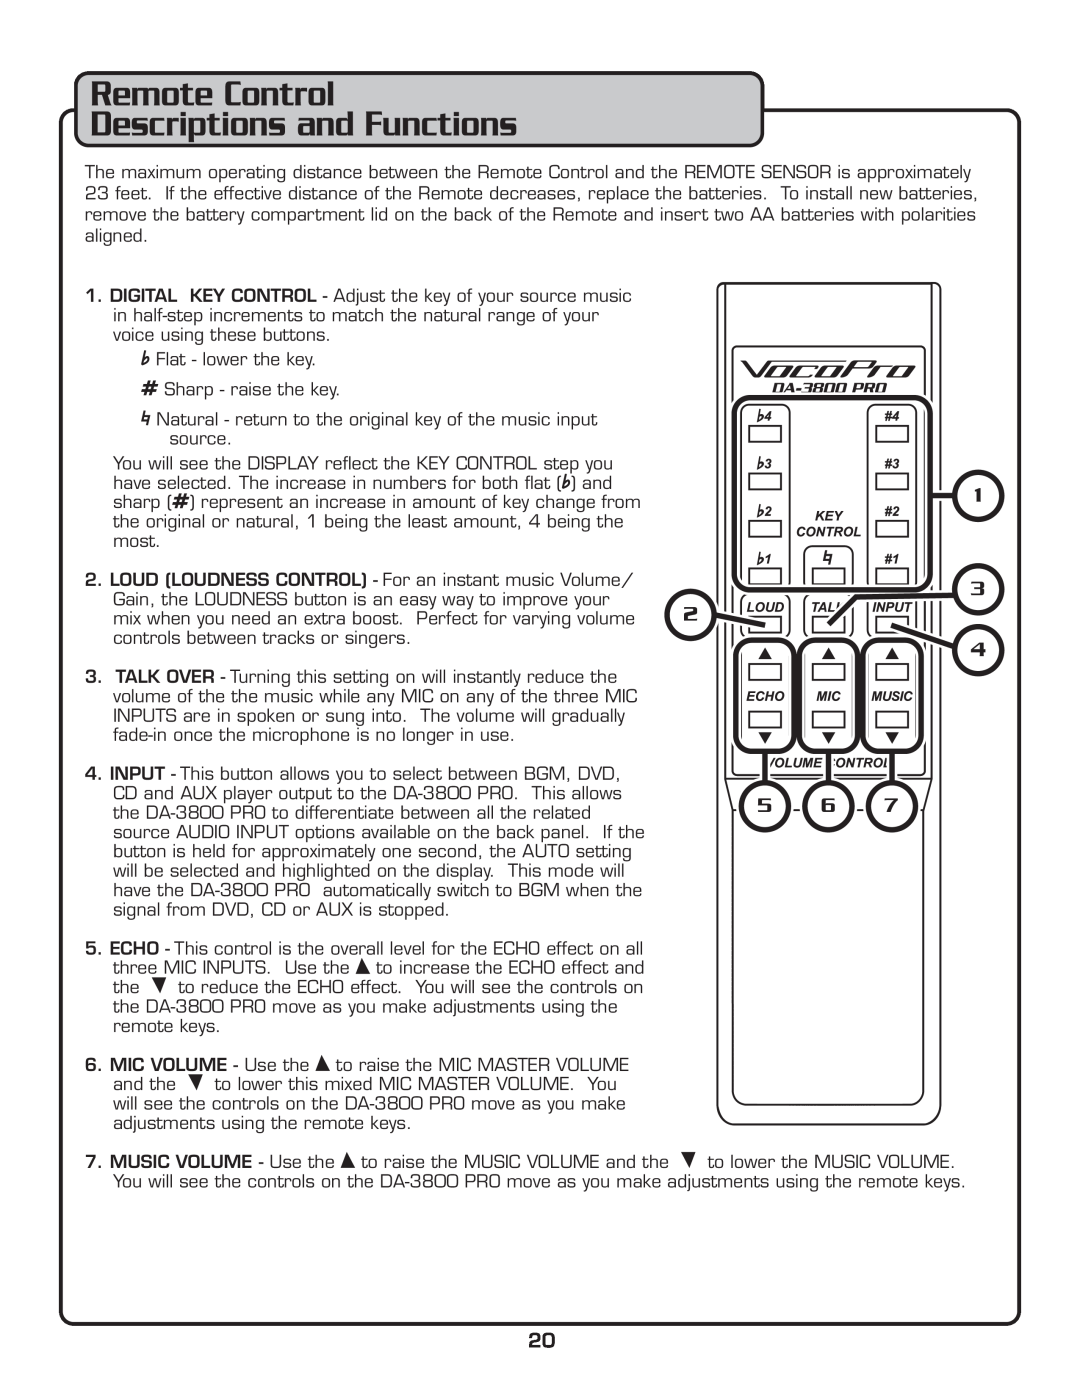 VocoPro DA-3800 PRO owner manual Remote Control Descriptions and Functions 